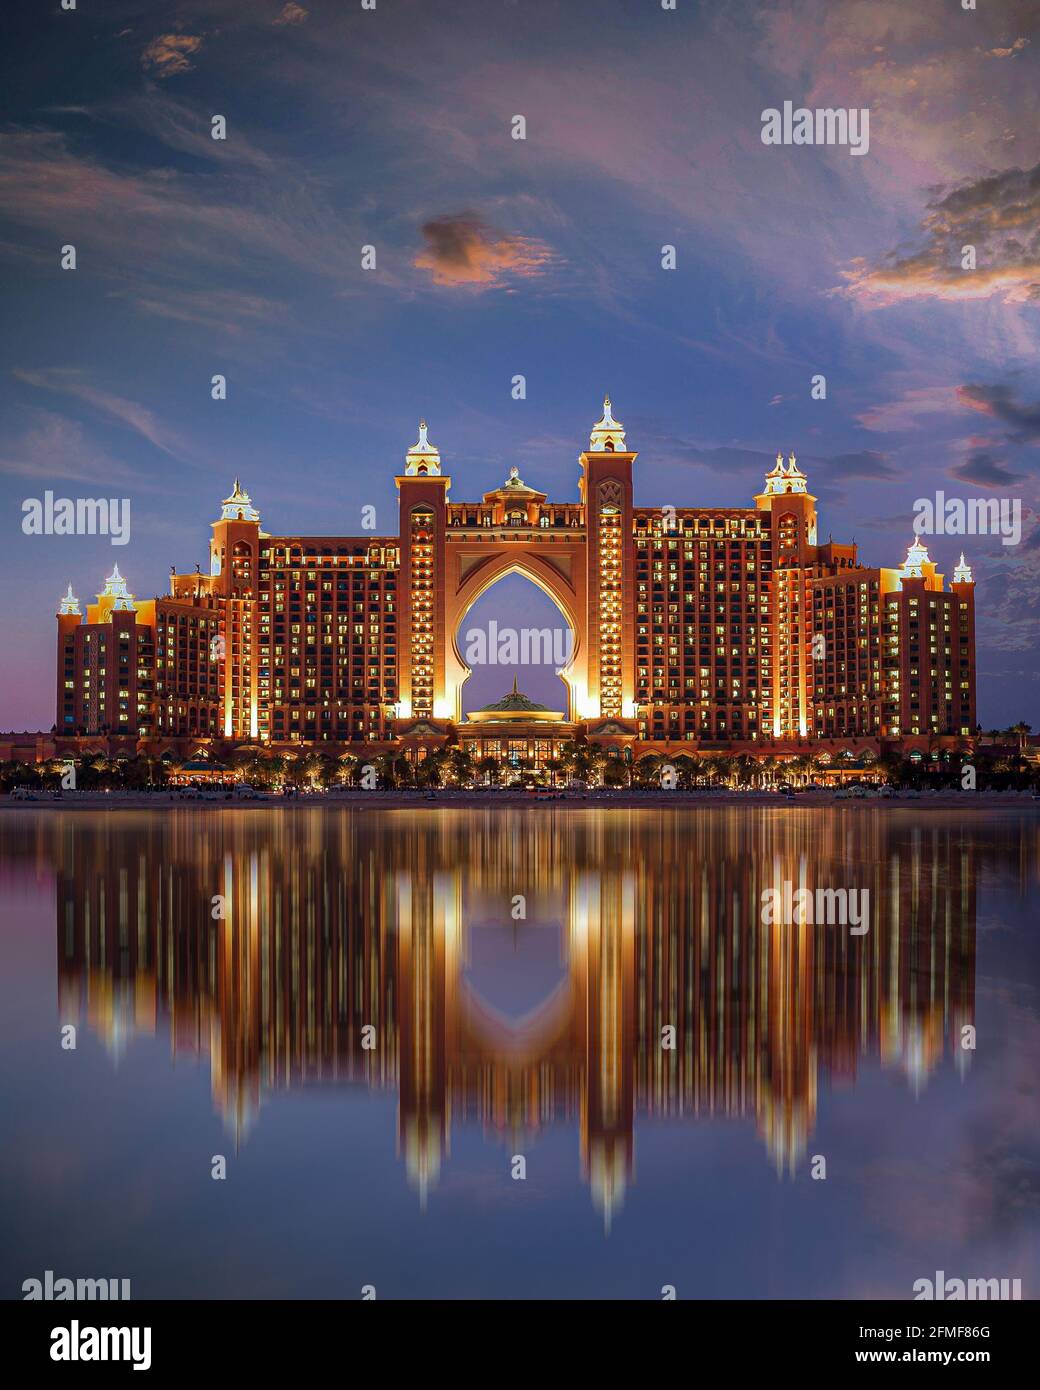 The Atlantis Dubai Stock Photo